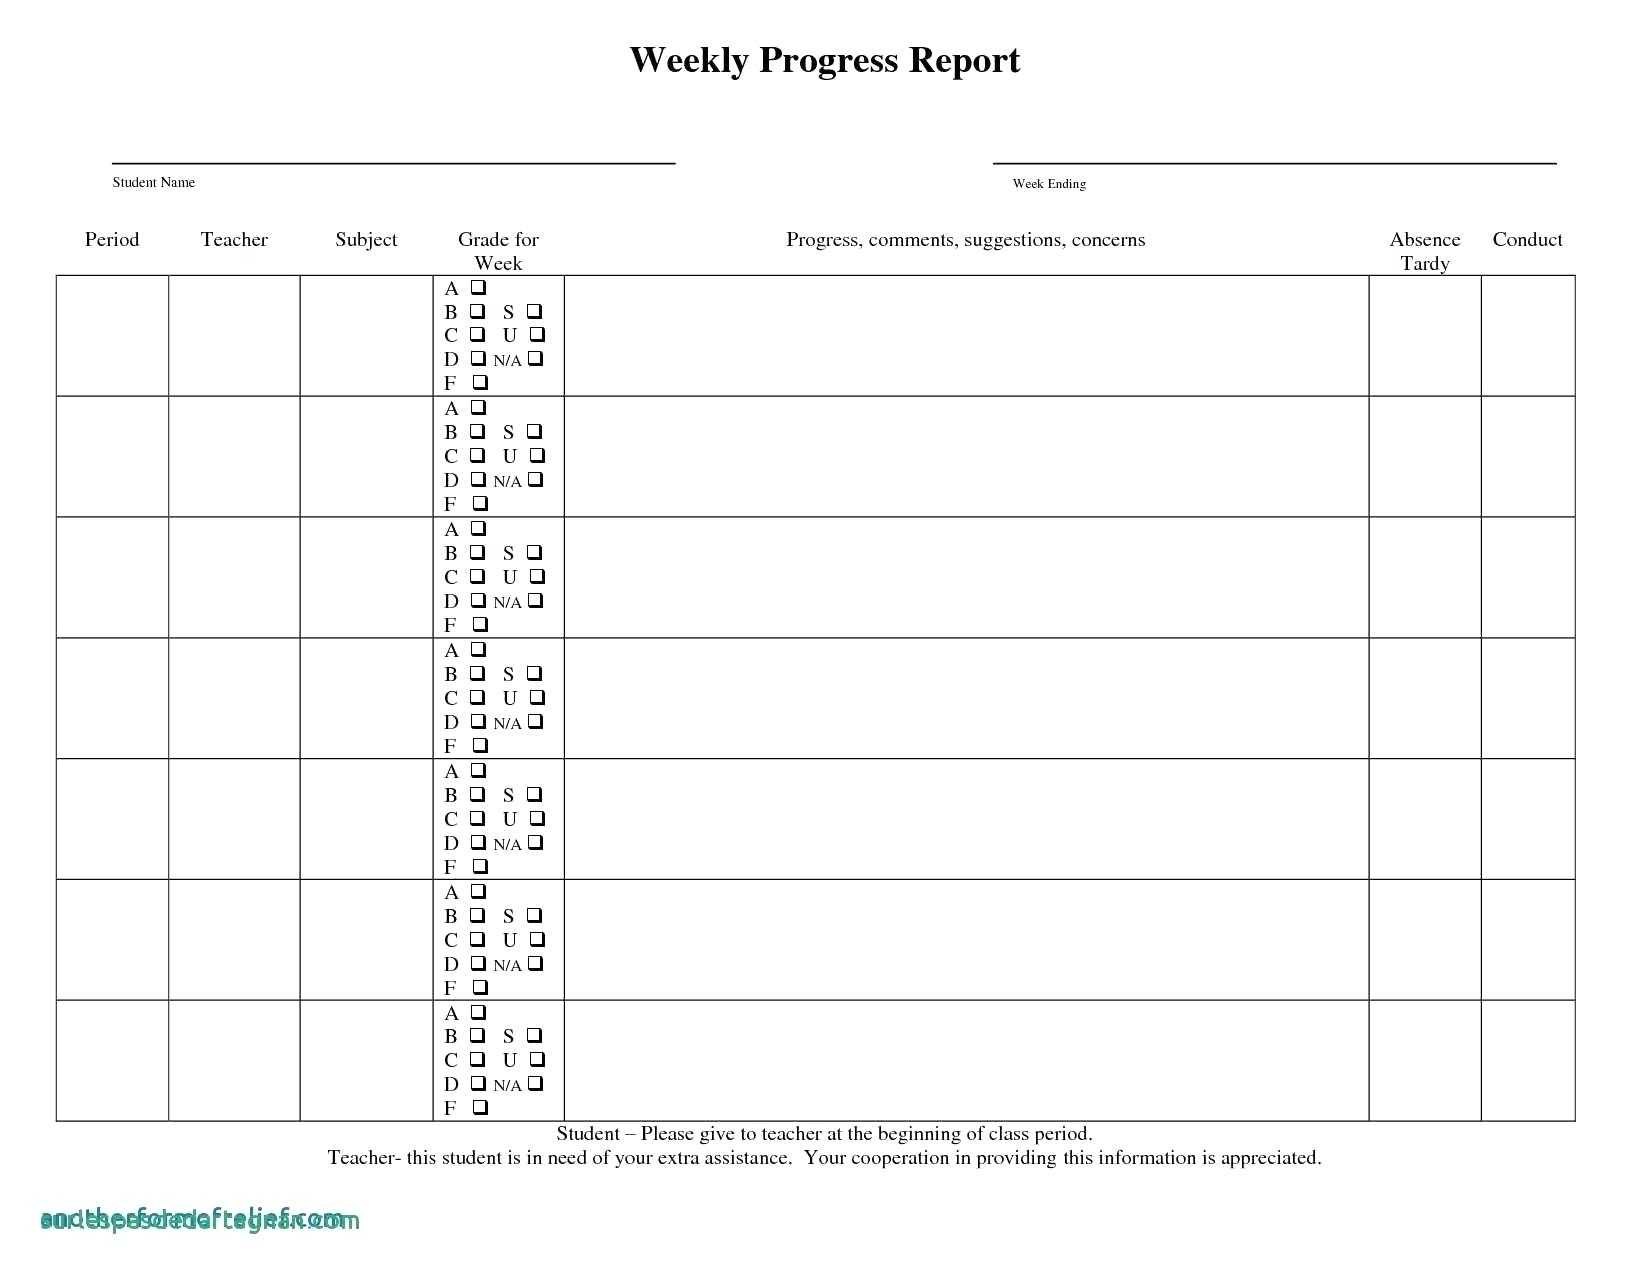 Weekly Progress Report Template Elementary Free School Throughout Progress Report Template Doc